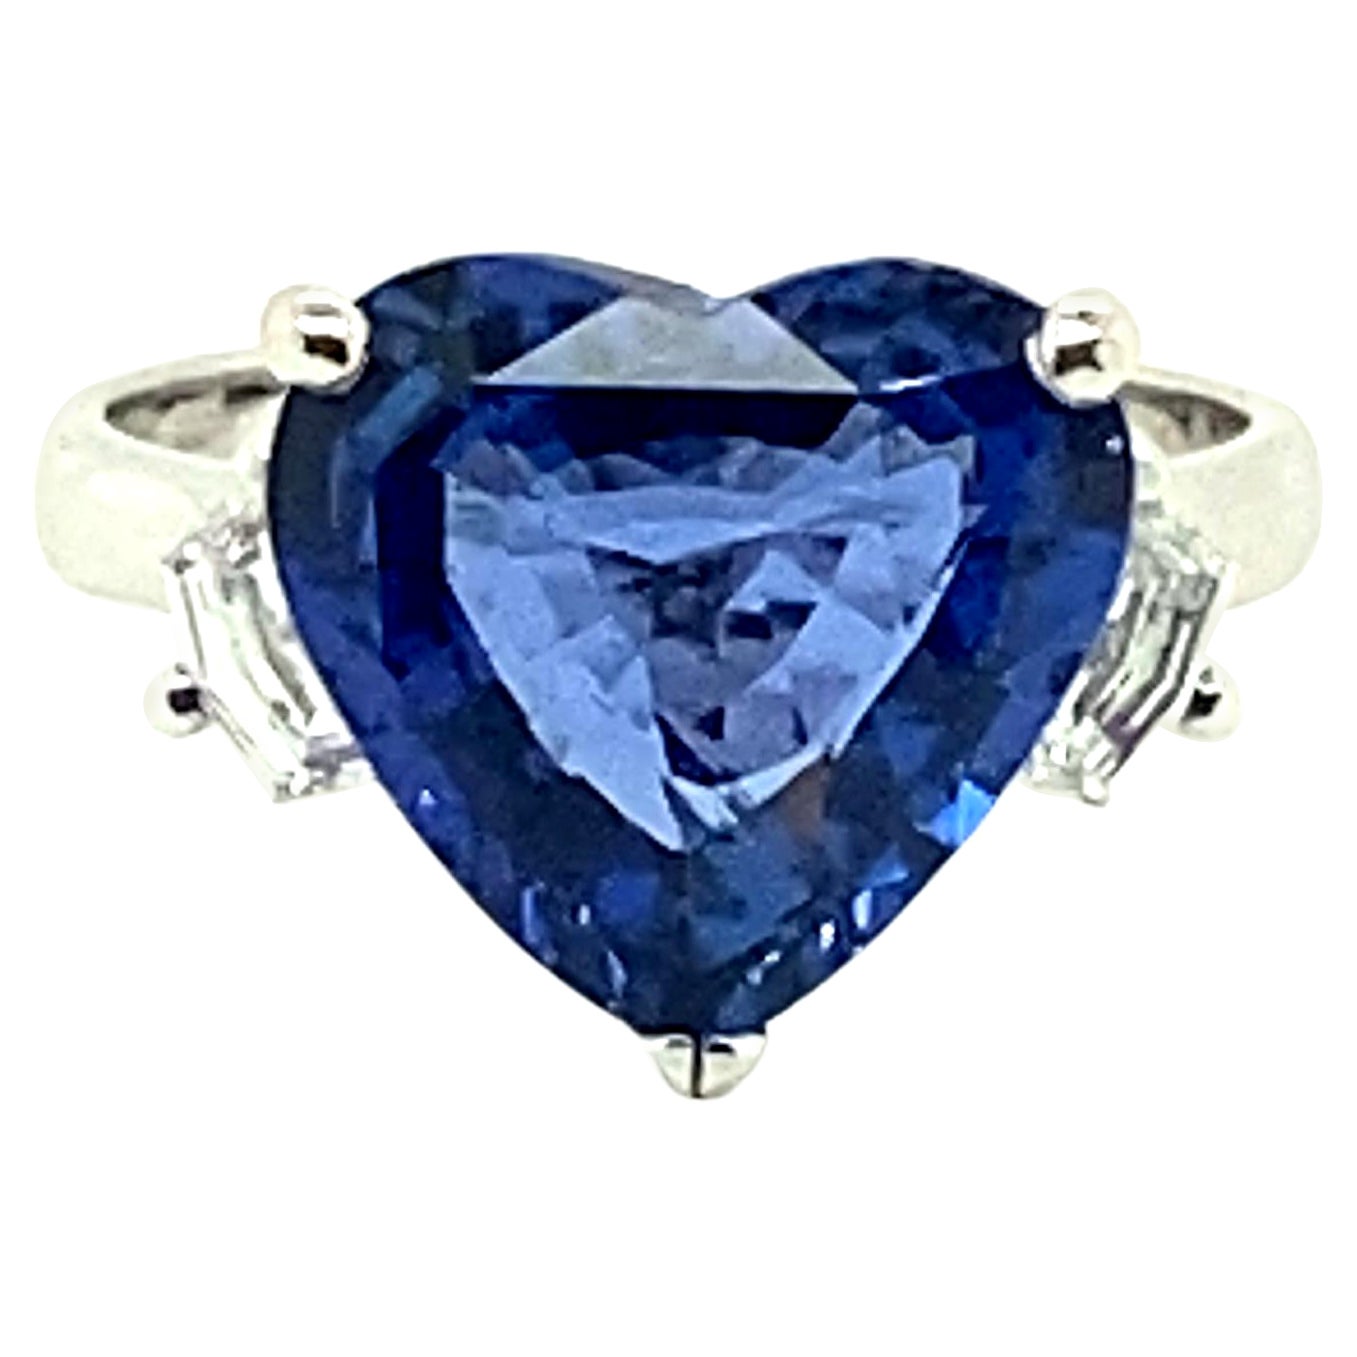 5.04 Carat Heart-Shape Vivid Blue Ceylon Sapphire and White Diamond Ring